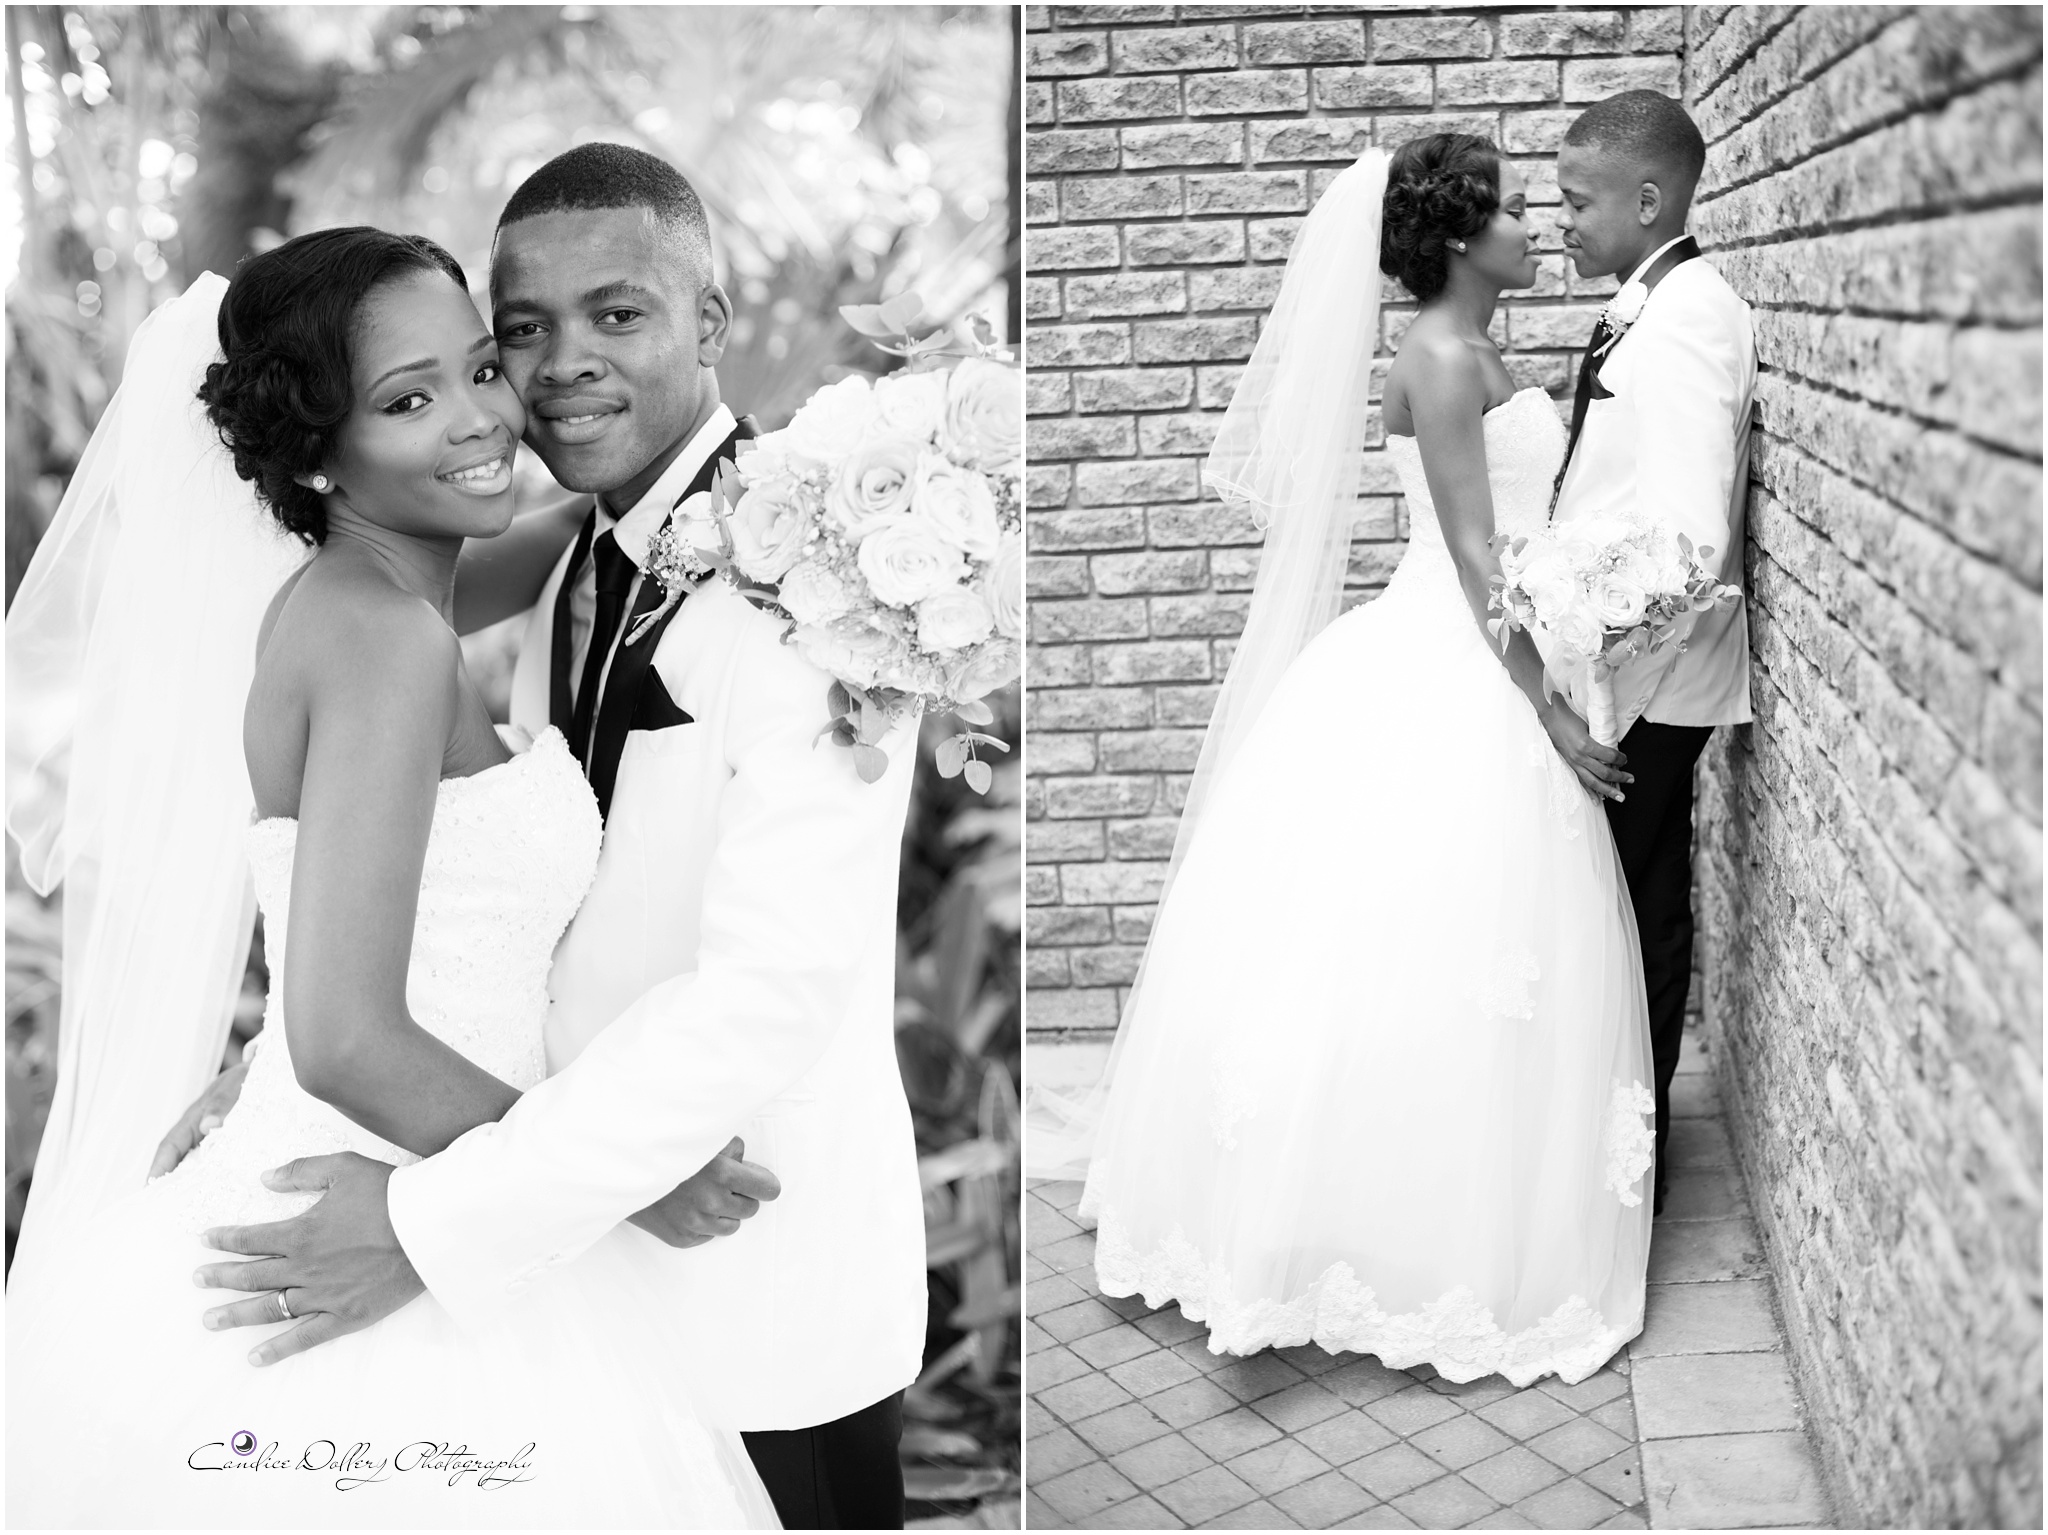 Asanda & Bonga's Wedding - Candice Dollery Photography_8228